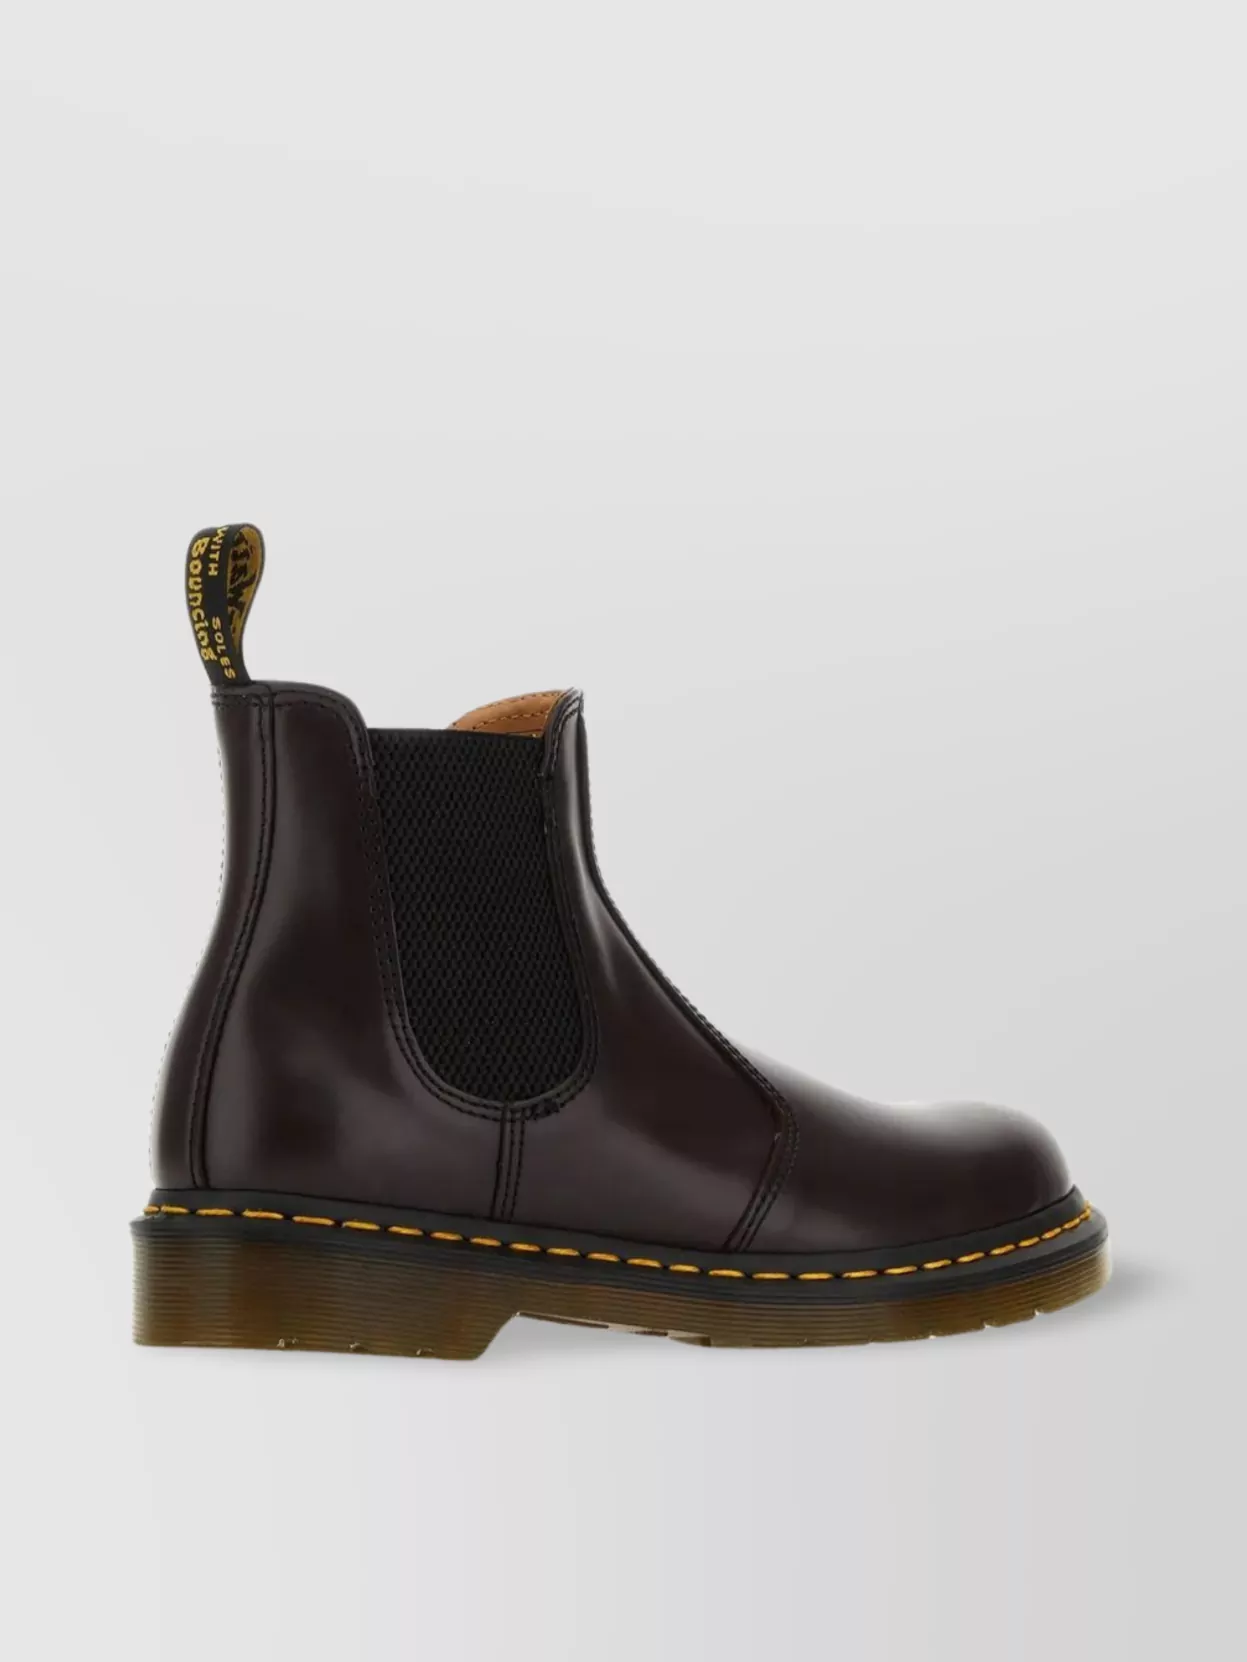 Shop Dr. Martens' Leather Ankle Boots 2976